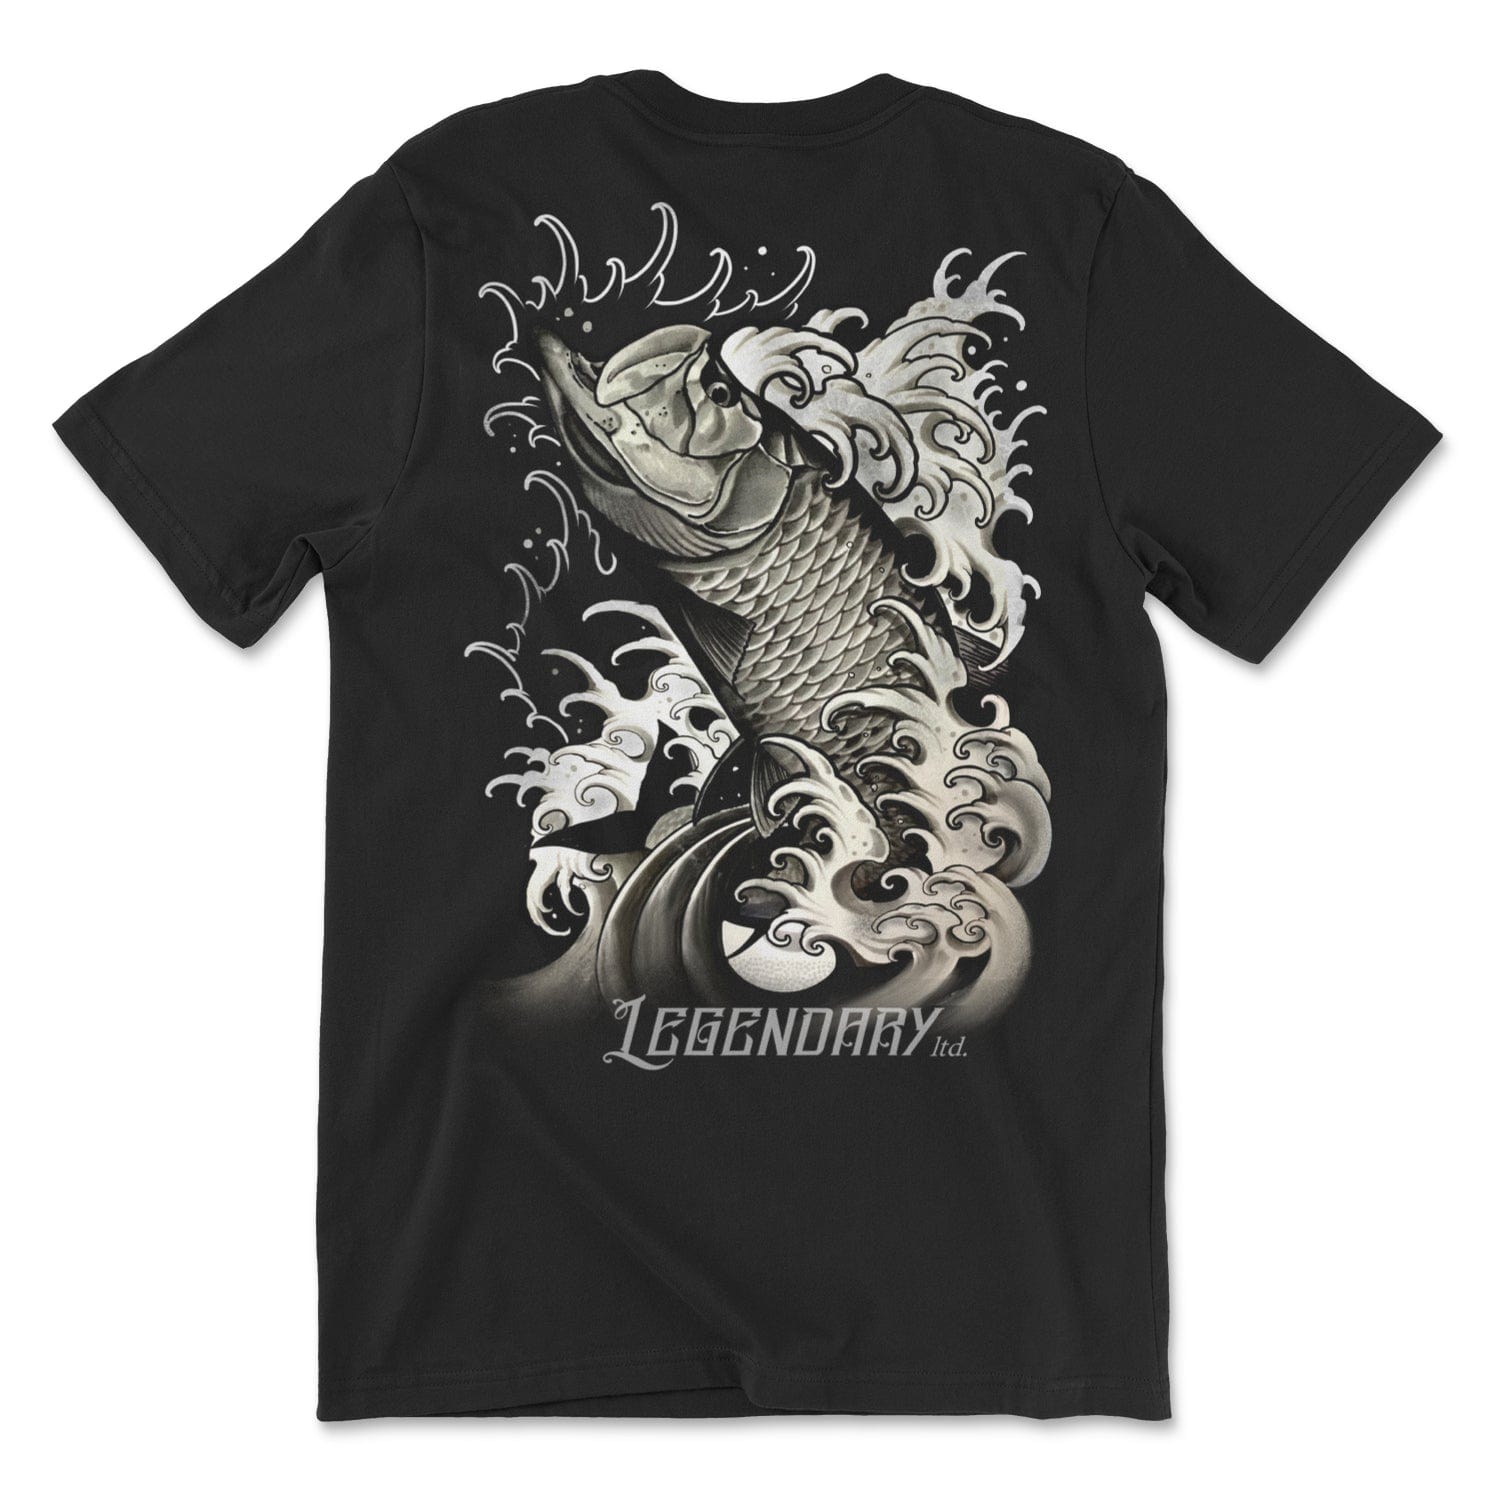 The Koi Fish Cotton Shirt - M/XL X-Lage